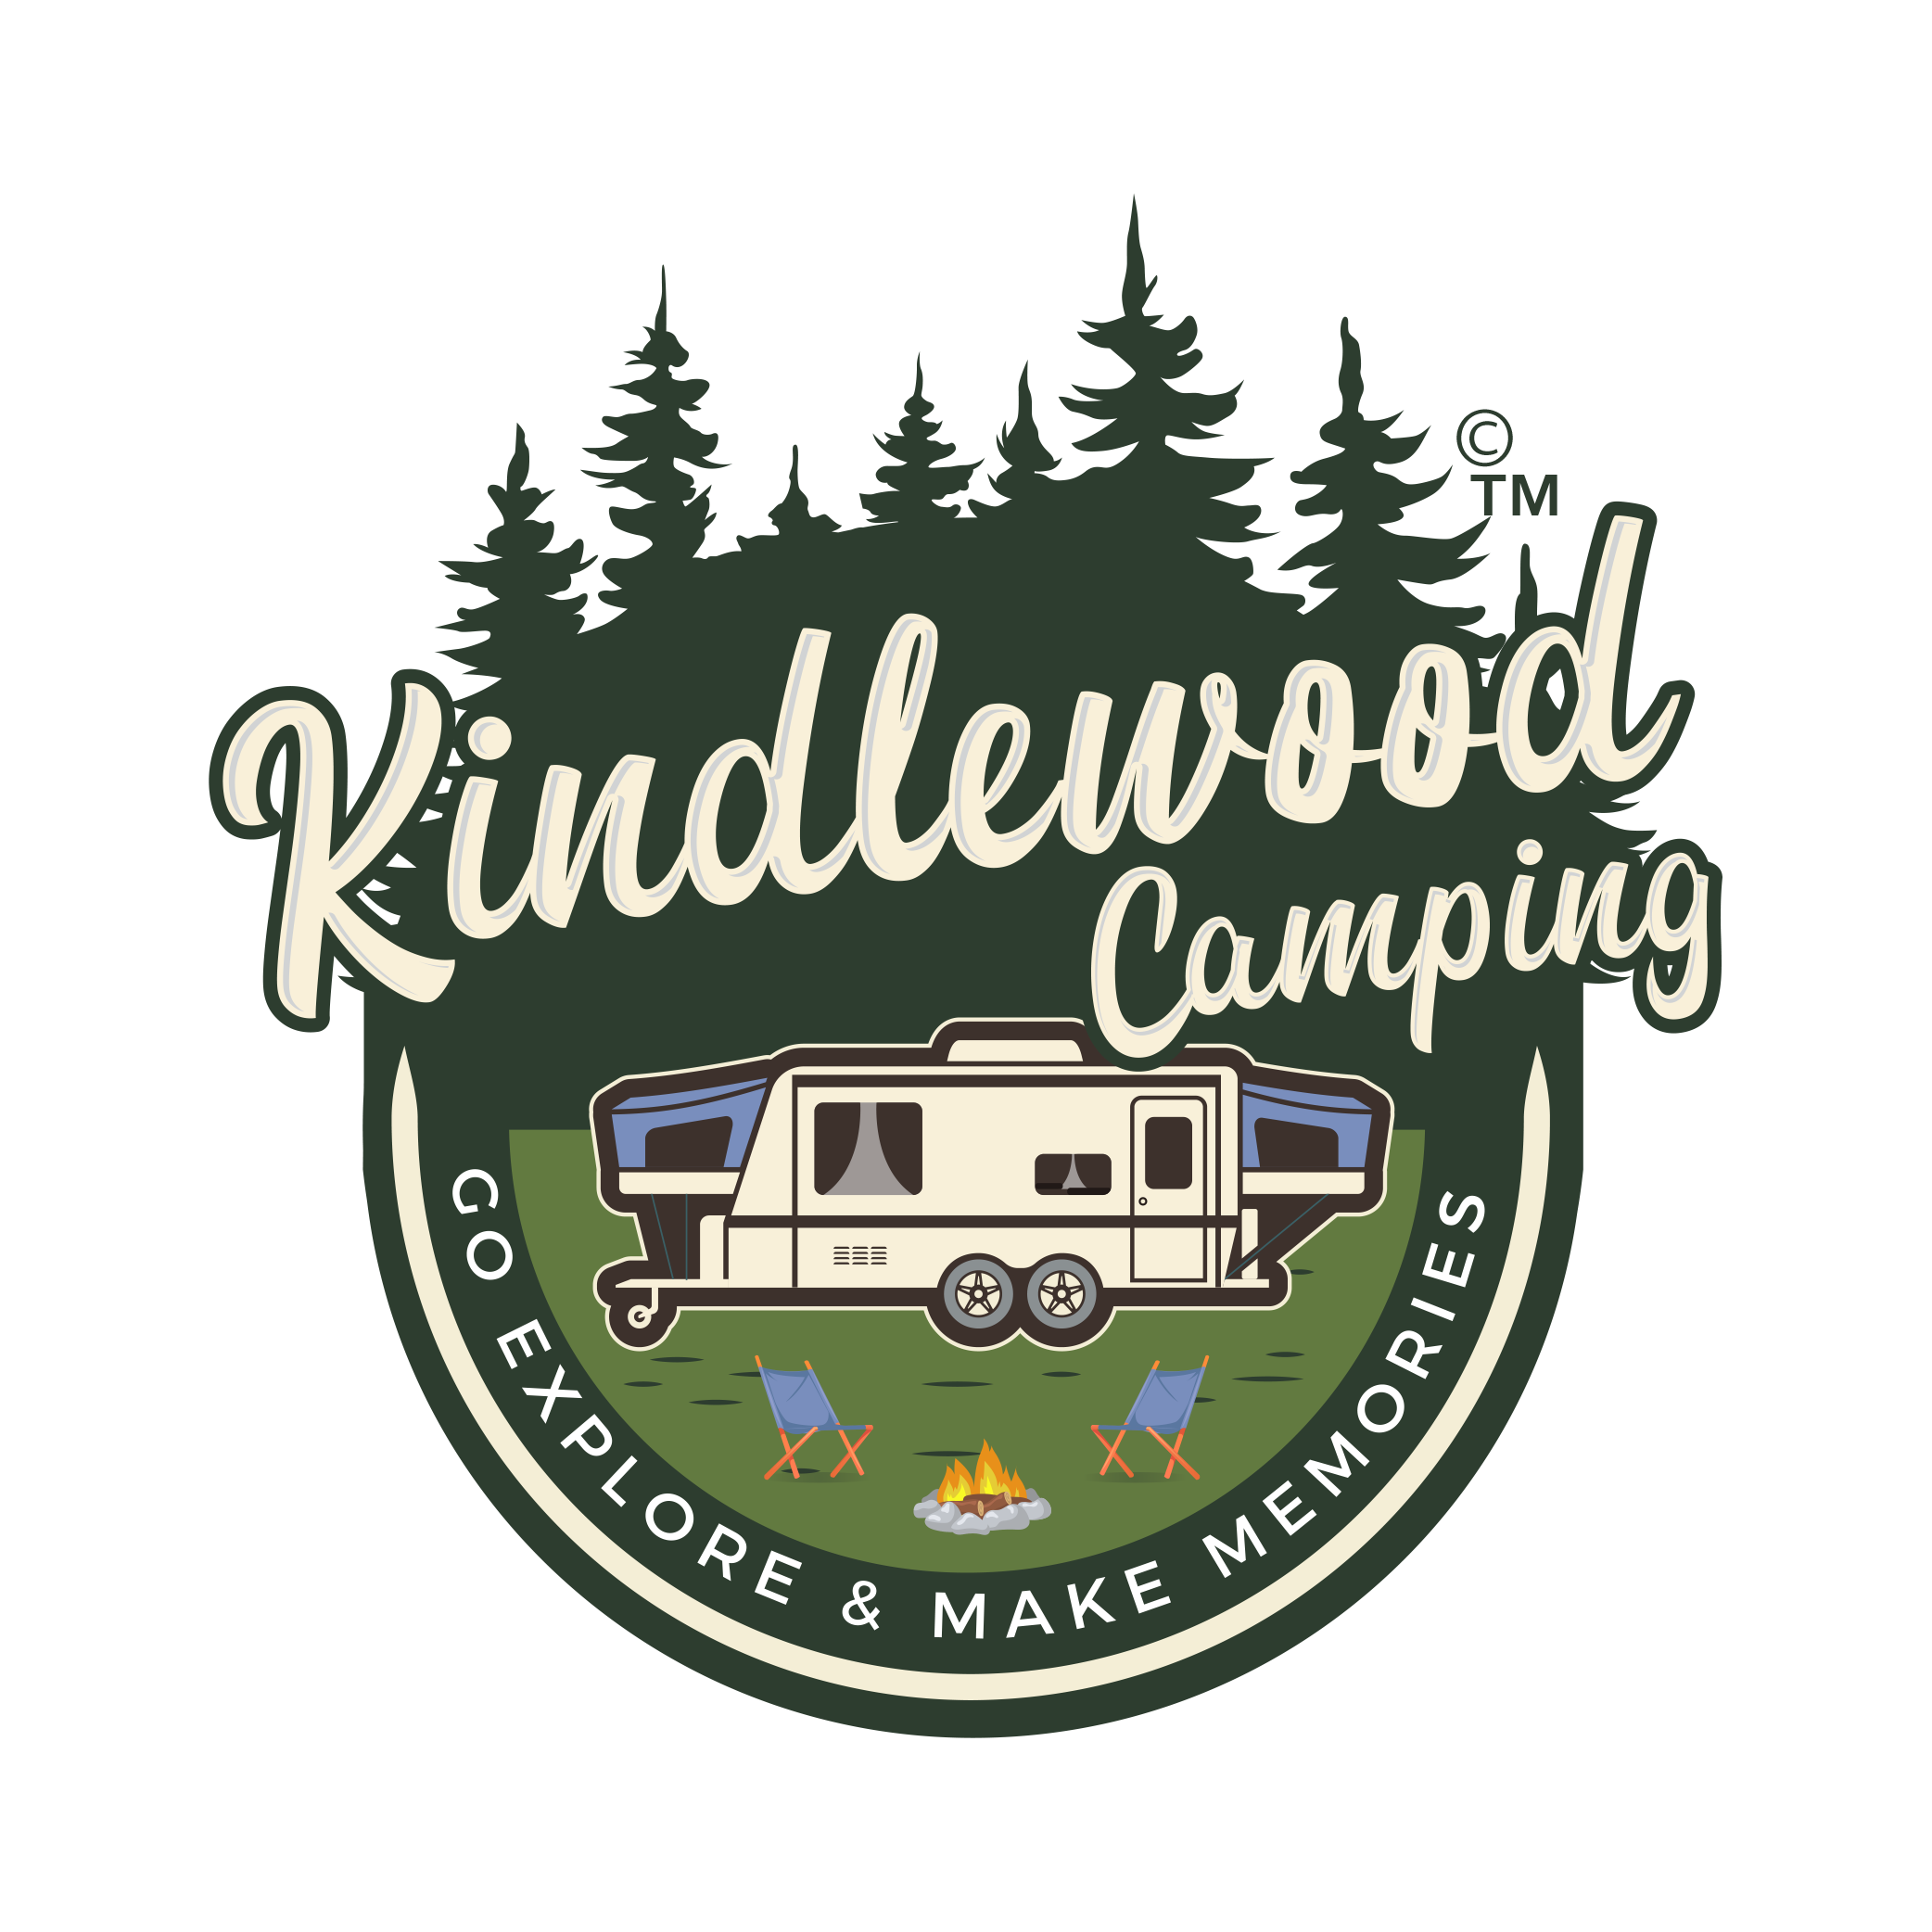 Kindlewood Camping, LLC